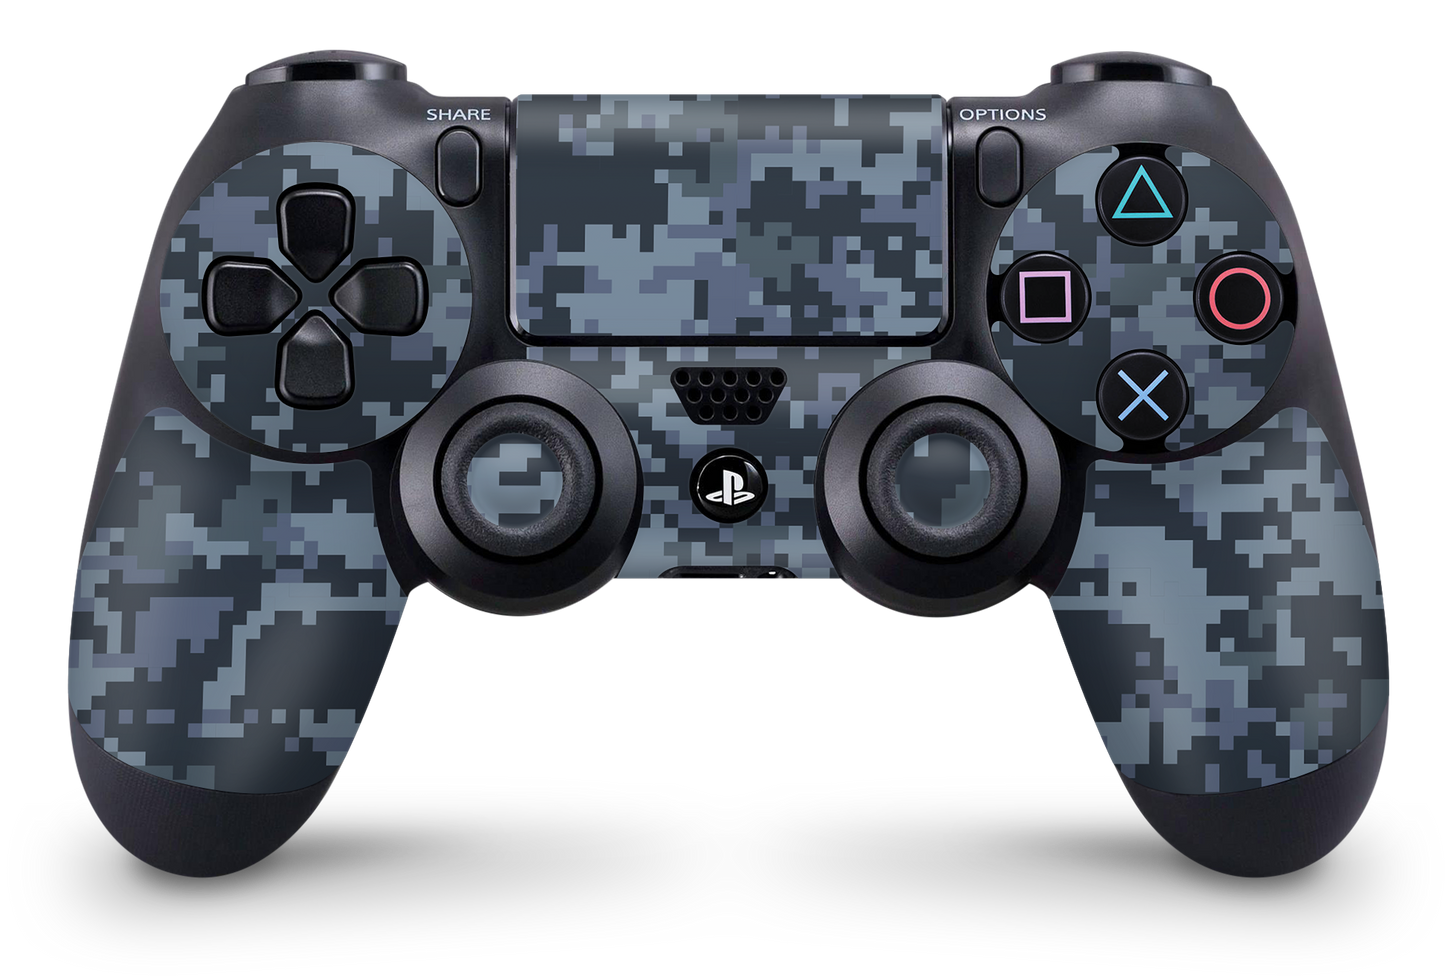 PS4 Playstation 4 Controller Skins - Vinyl Skin Aufkleber für Gaming Controller Digital navy camo Aufkleber Skins4u   